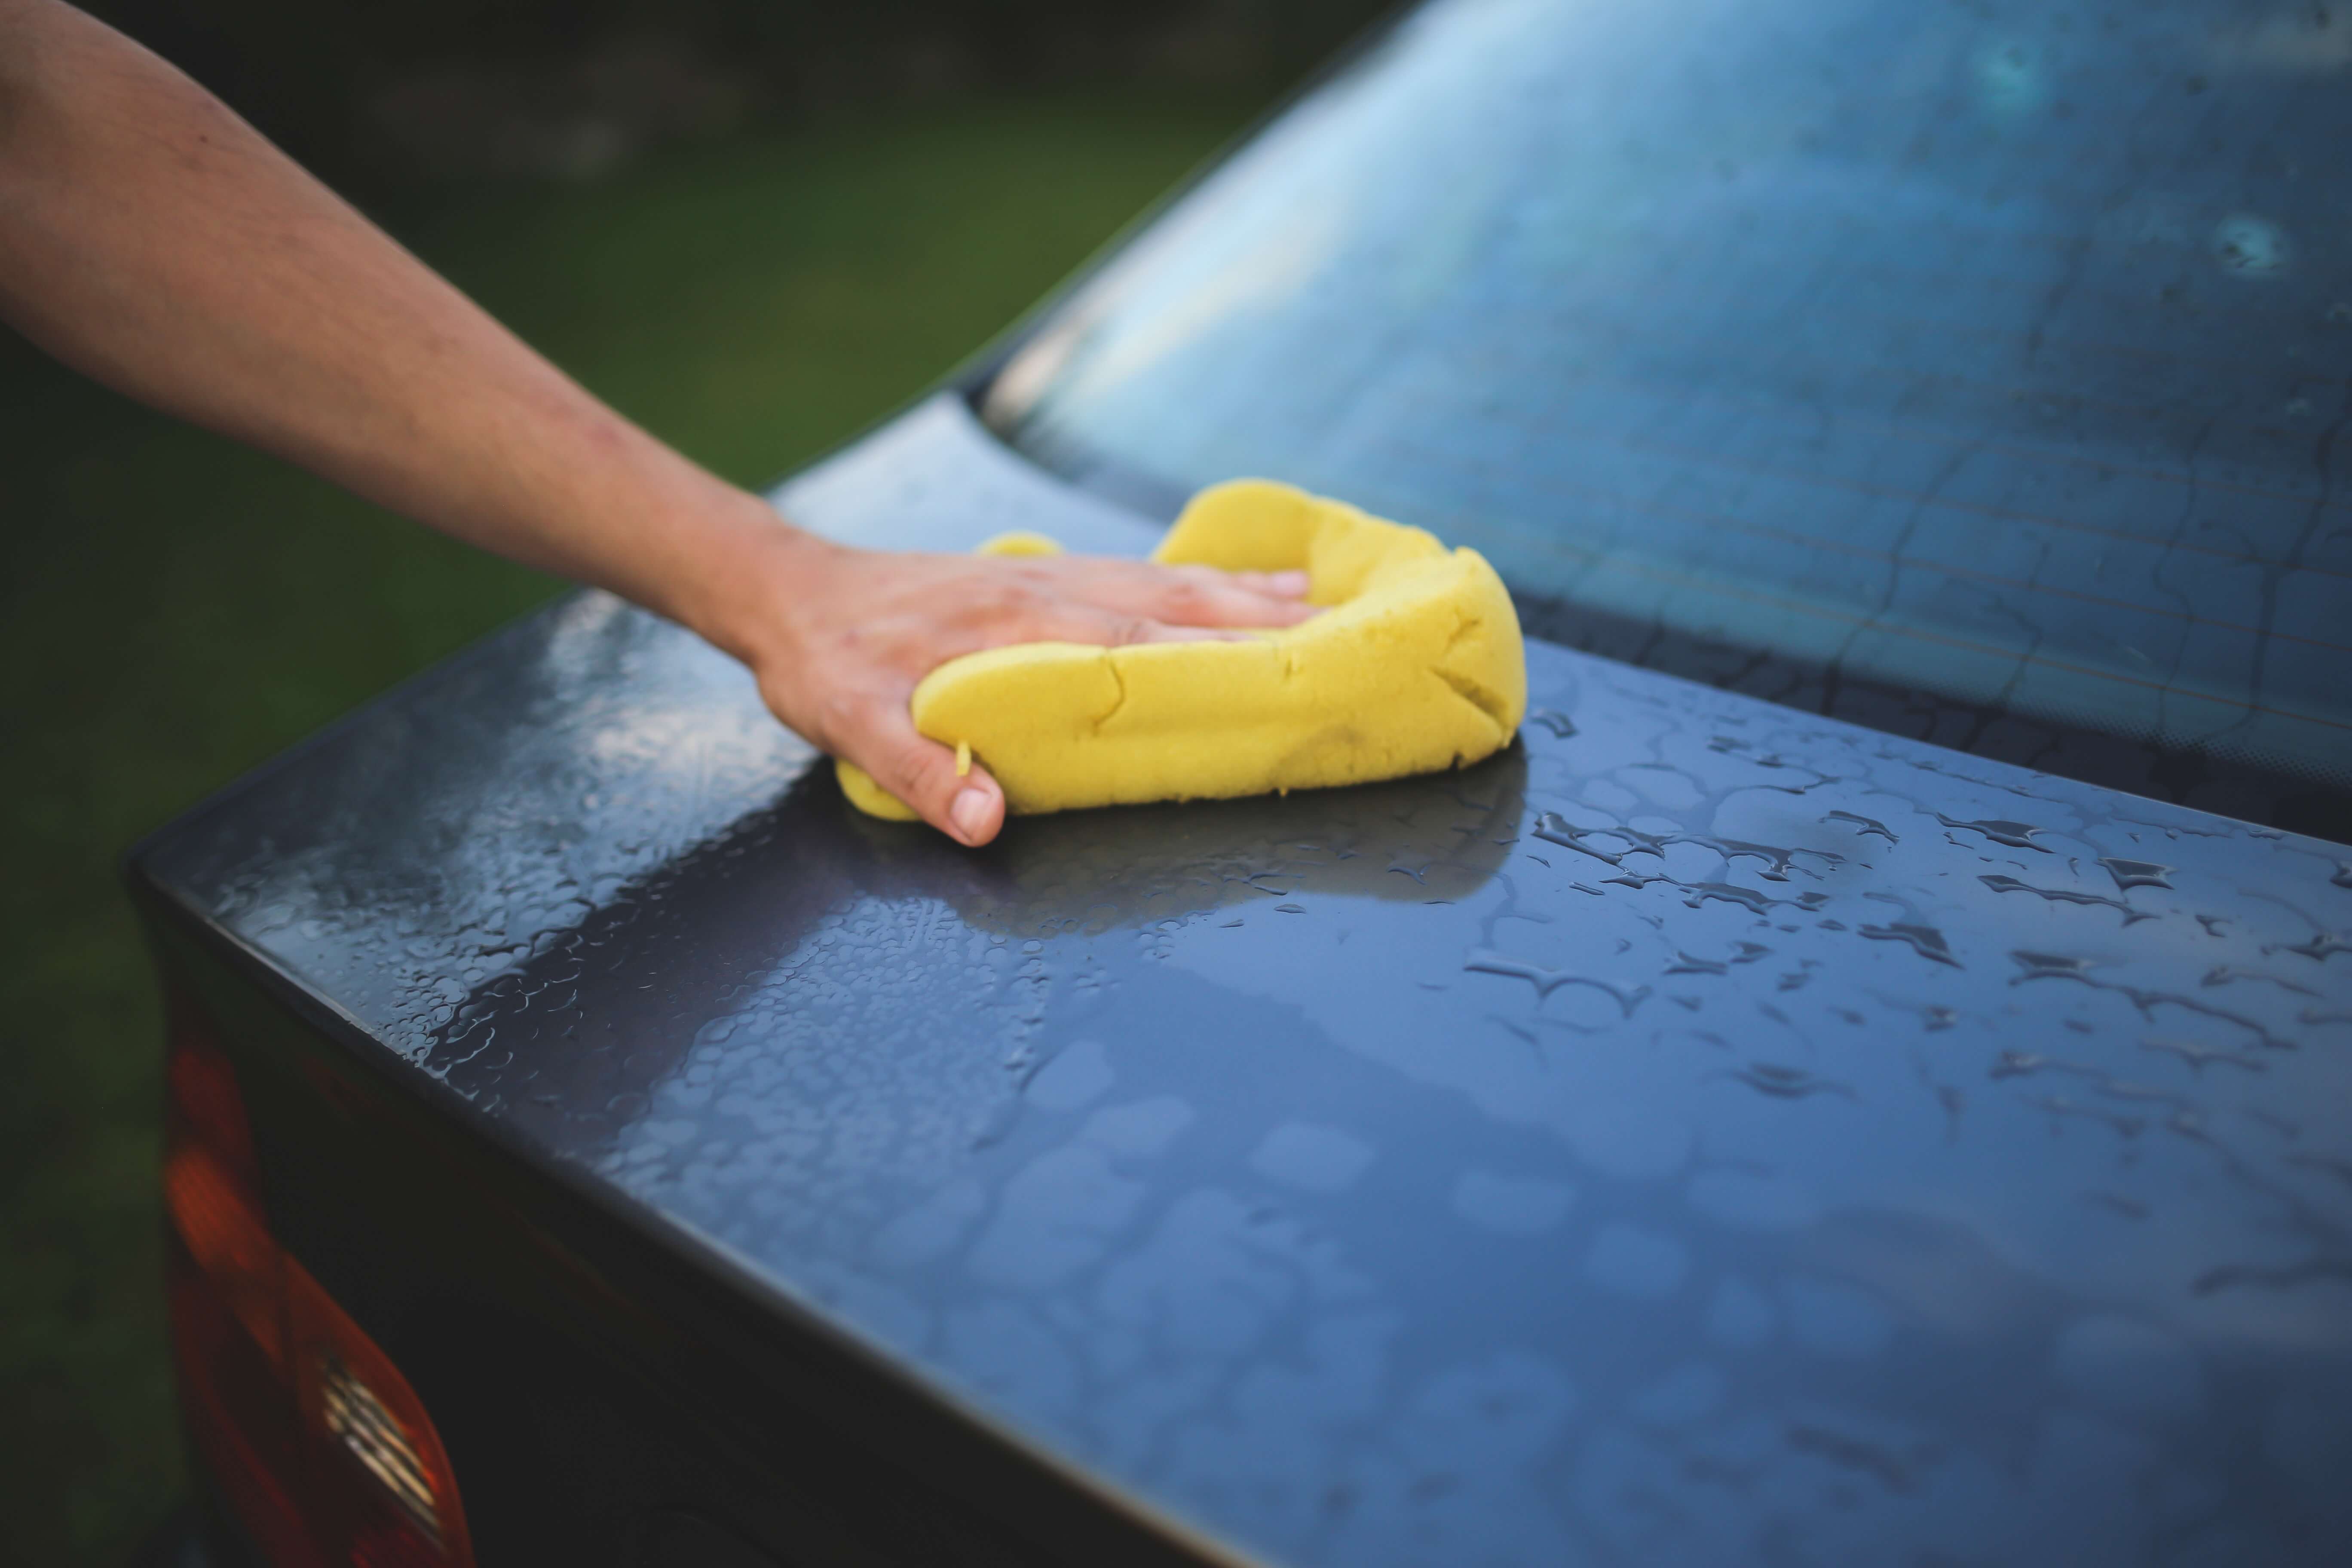 Dynamic pricing a ‘hygiene factor’ for rental car operators